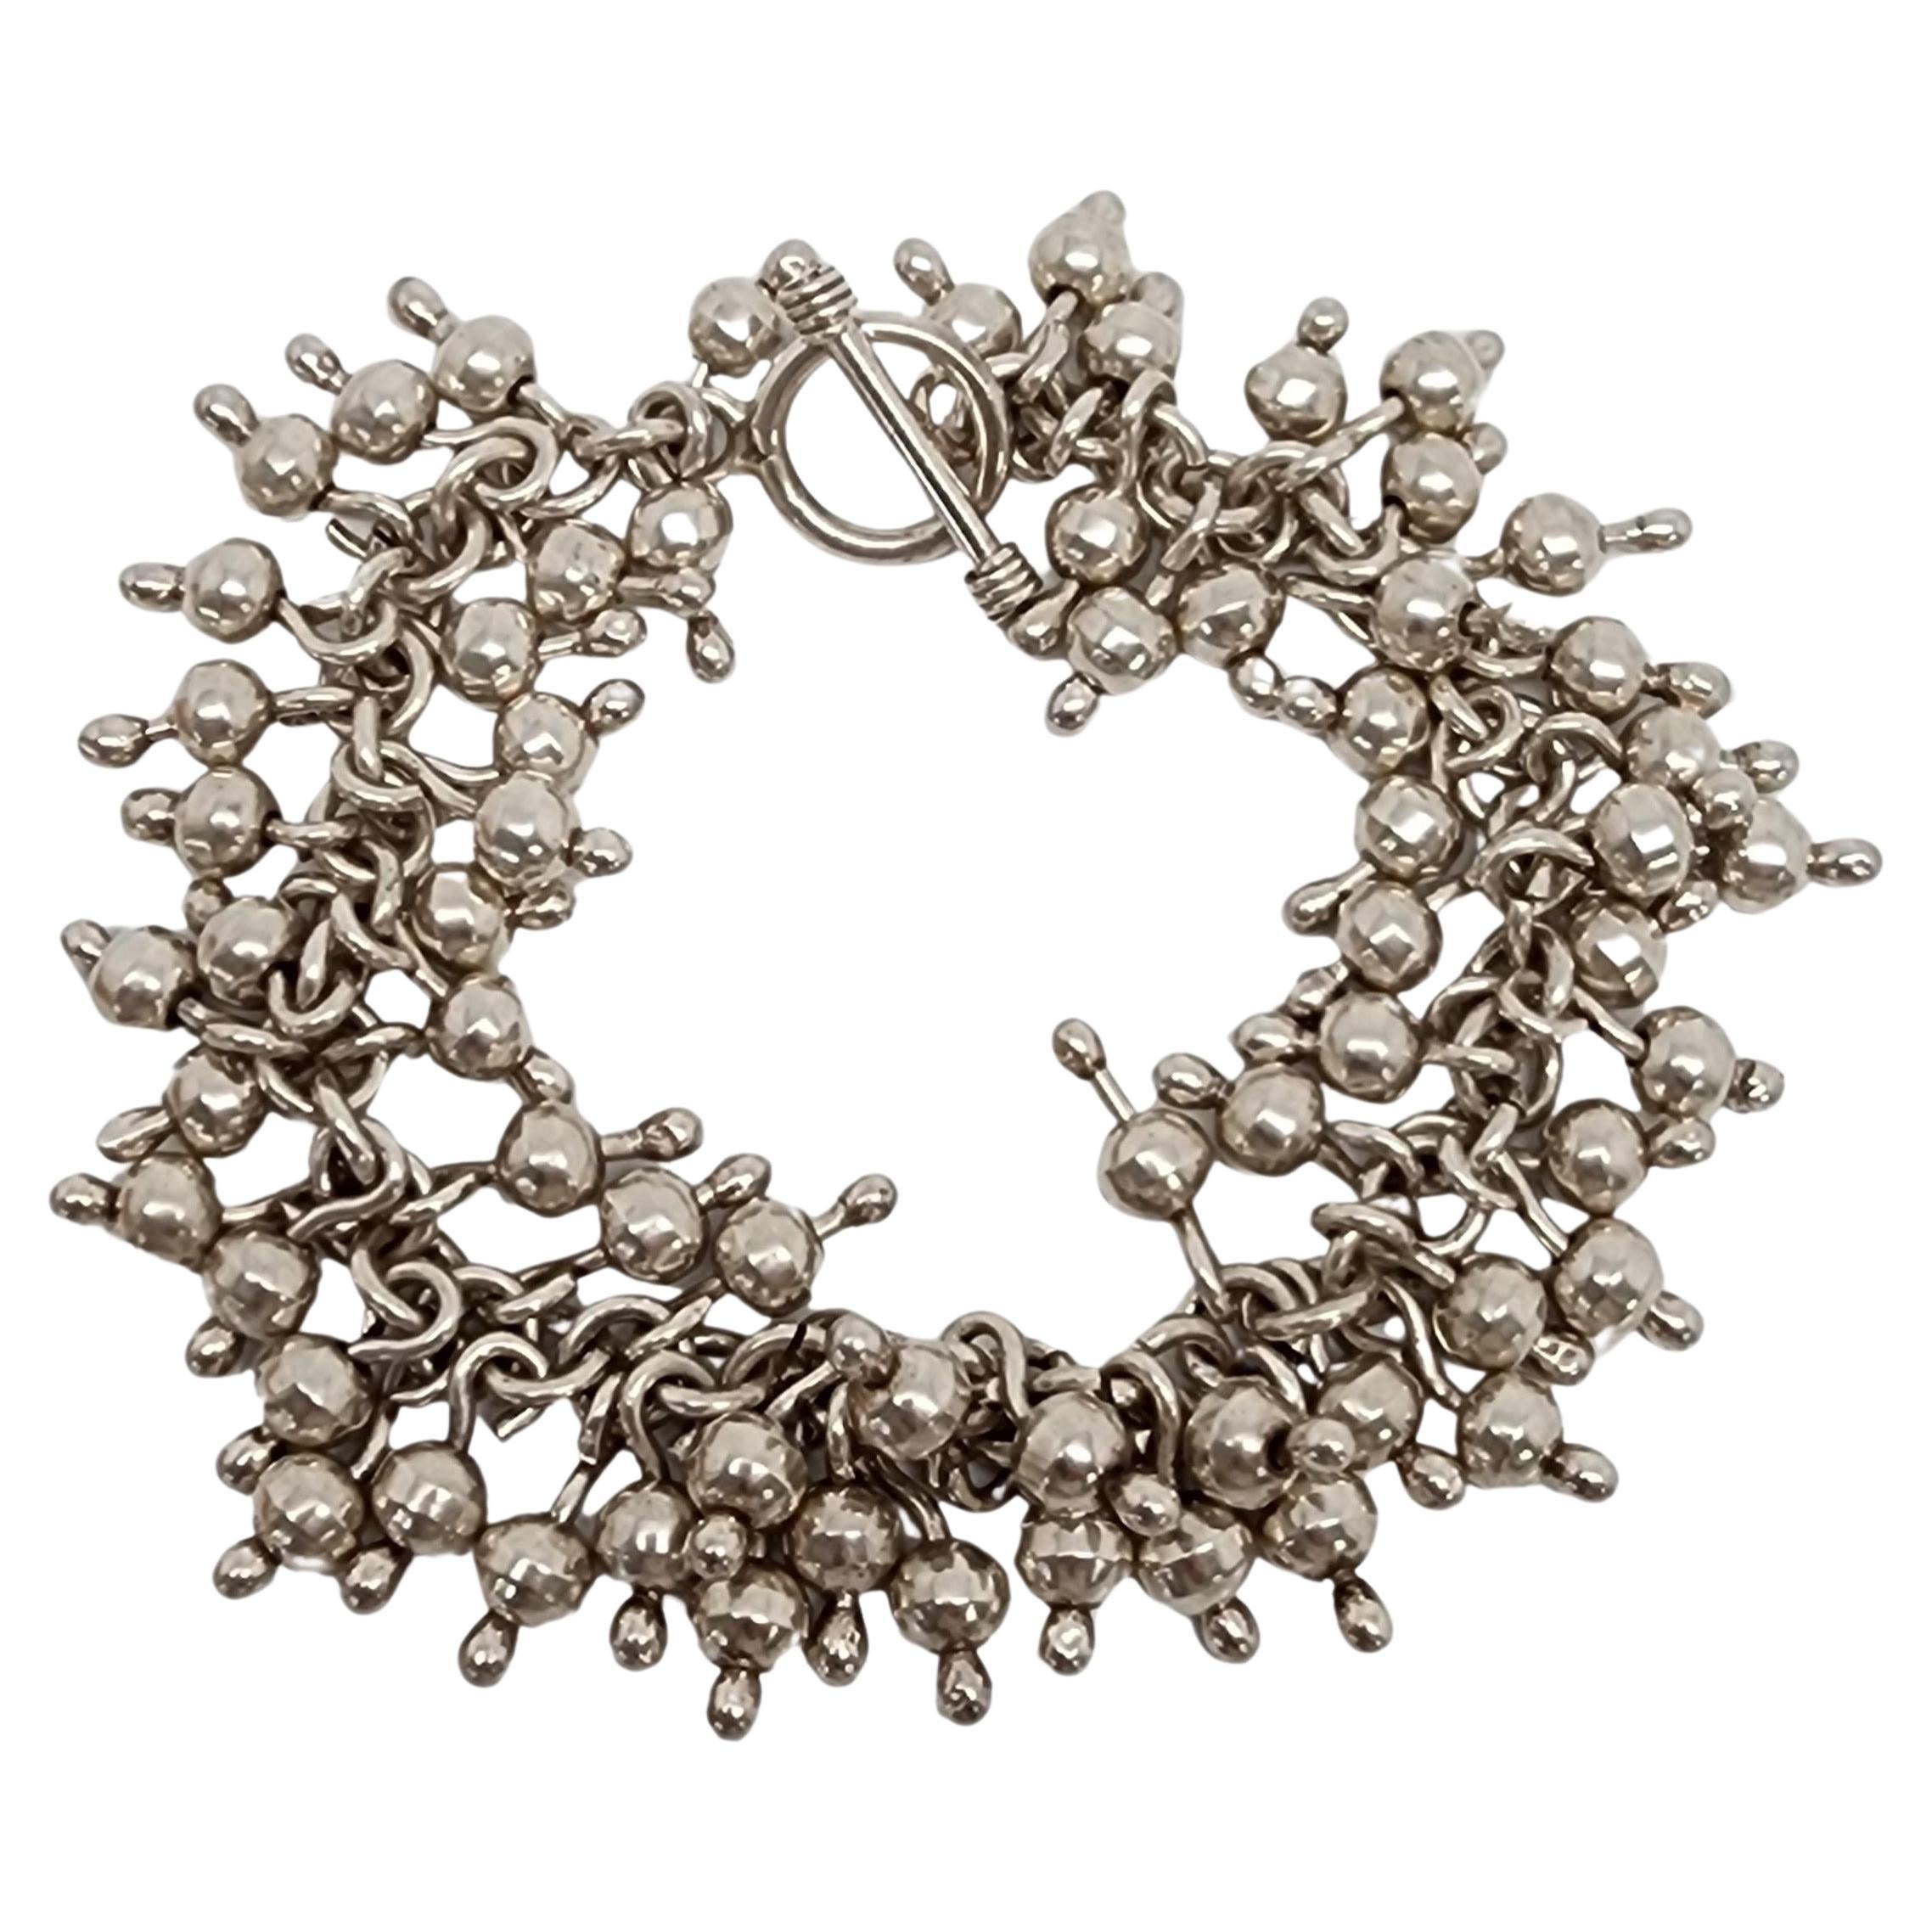 Silpada Sterling Silver Dangle Bead Cha Cha Bracelet #16053 For Sale